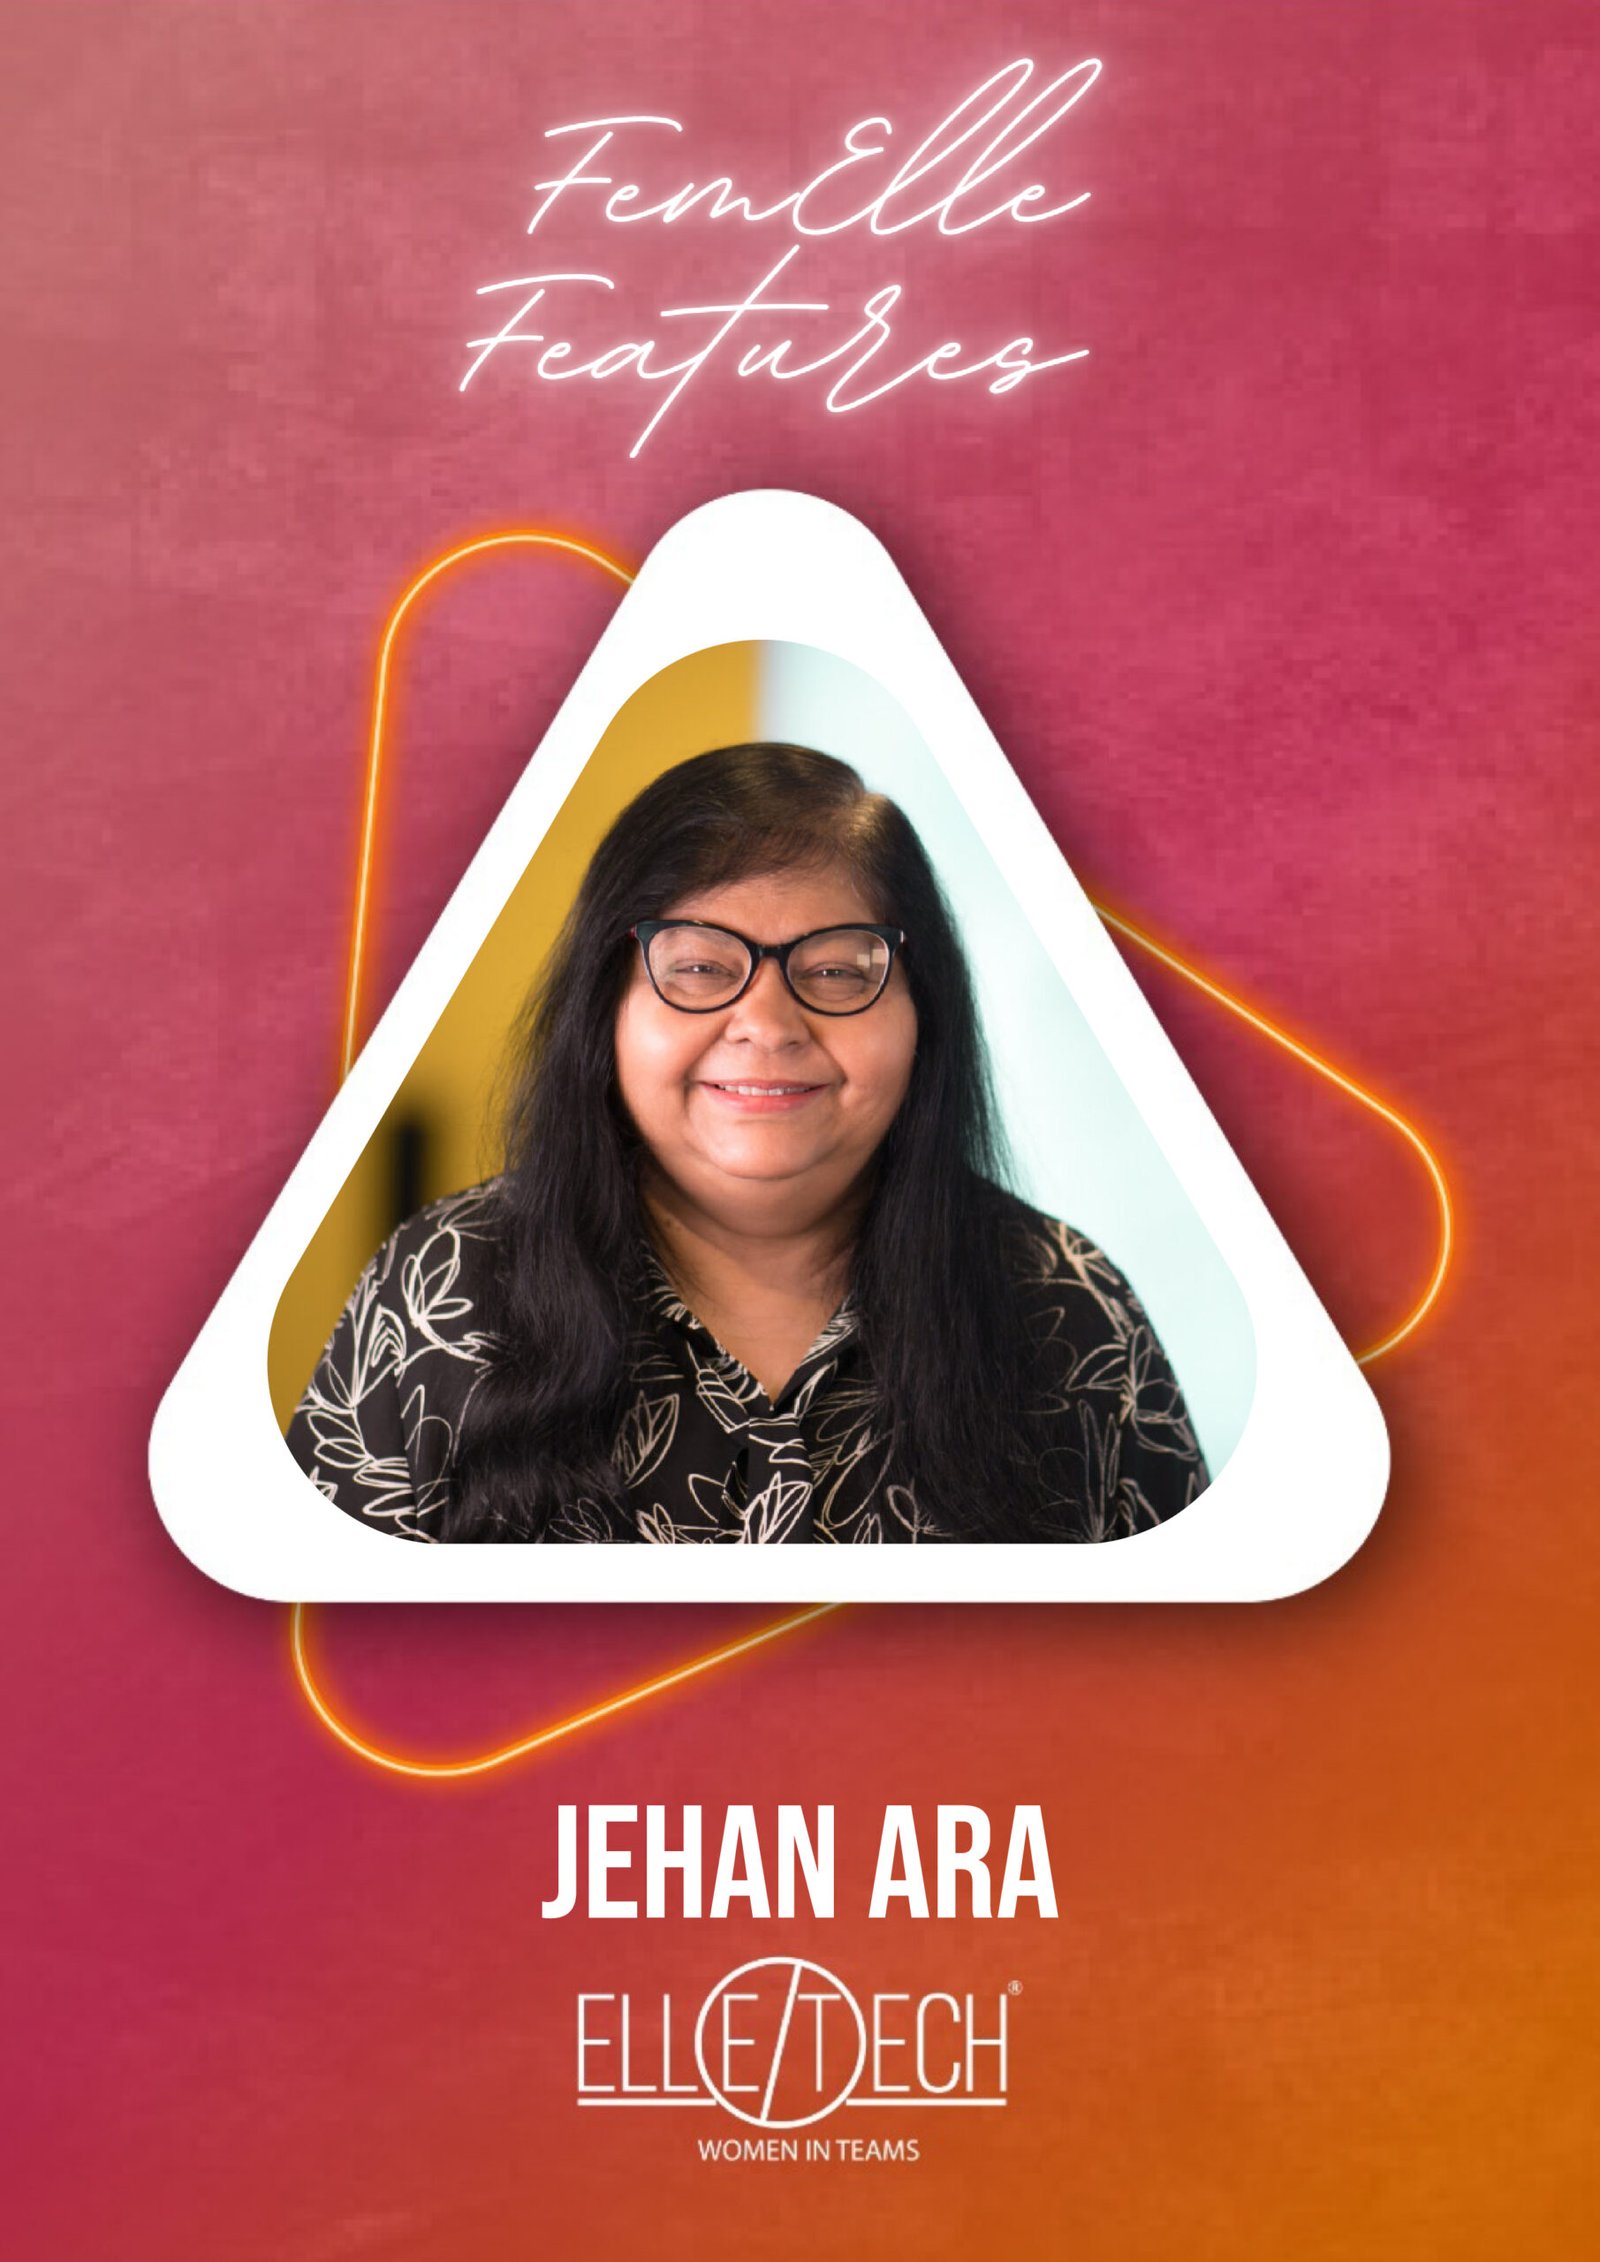 FemElle Feature: Jehan Ara